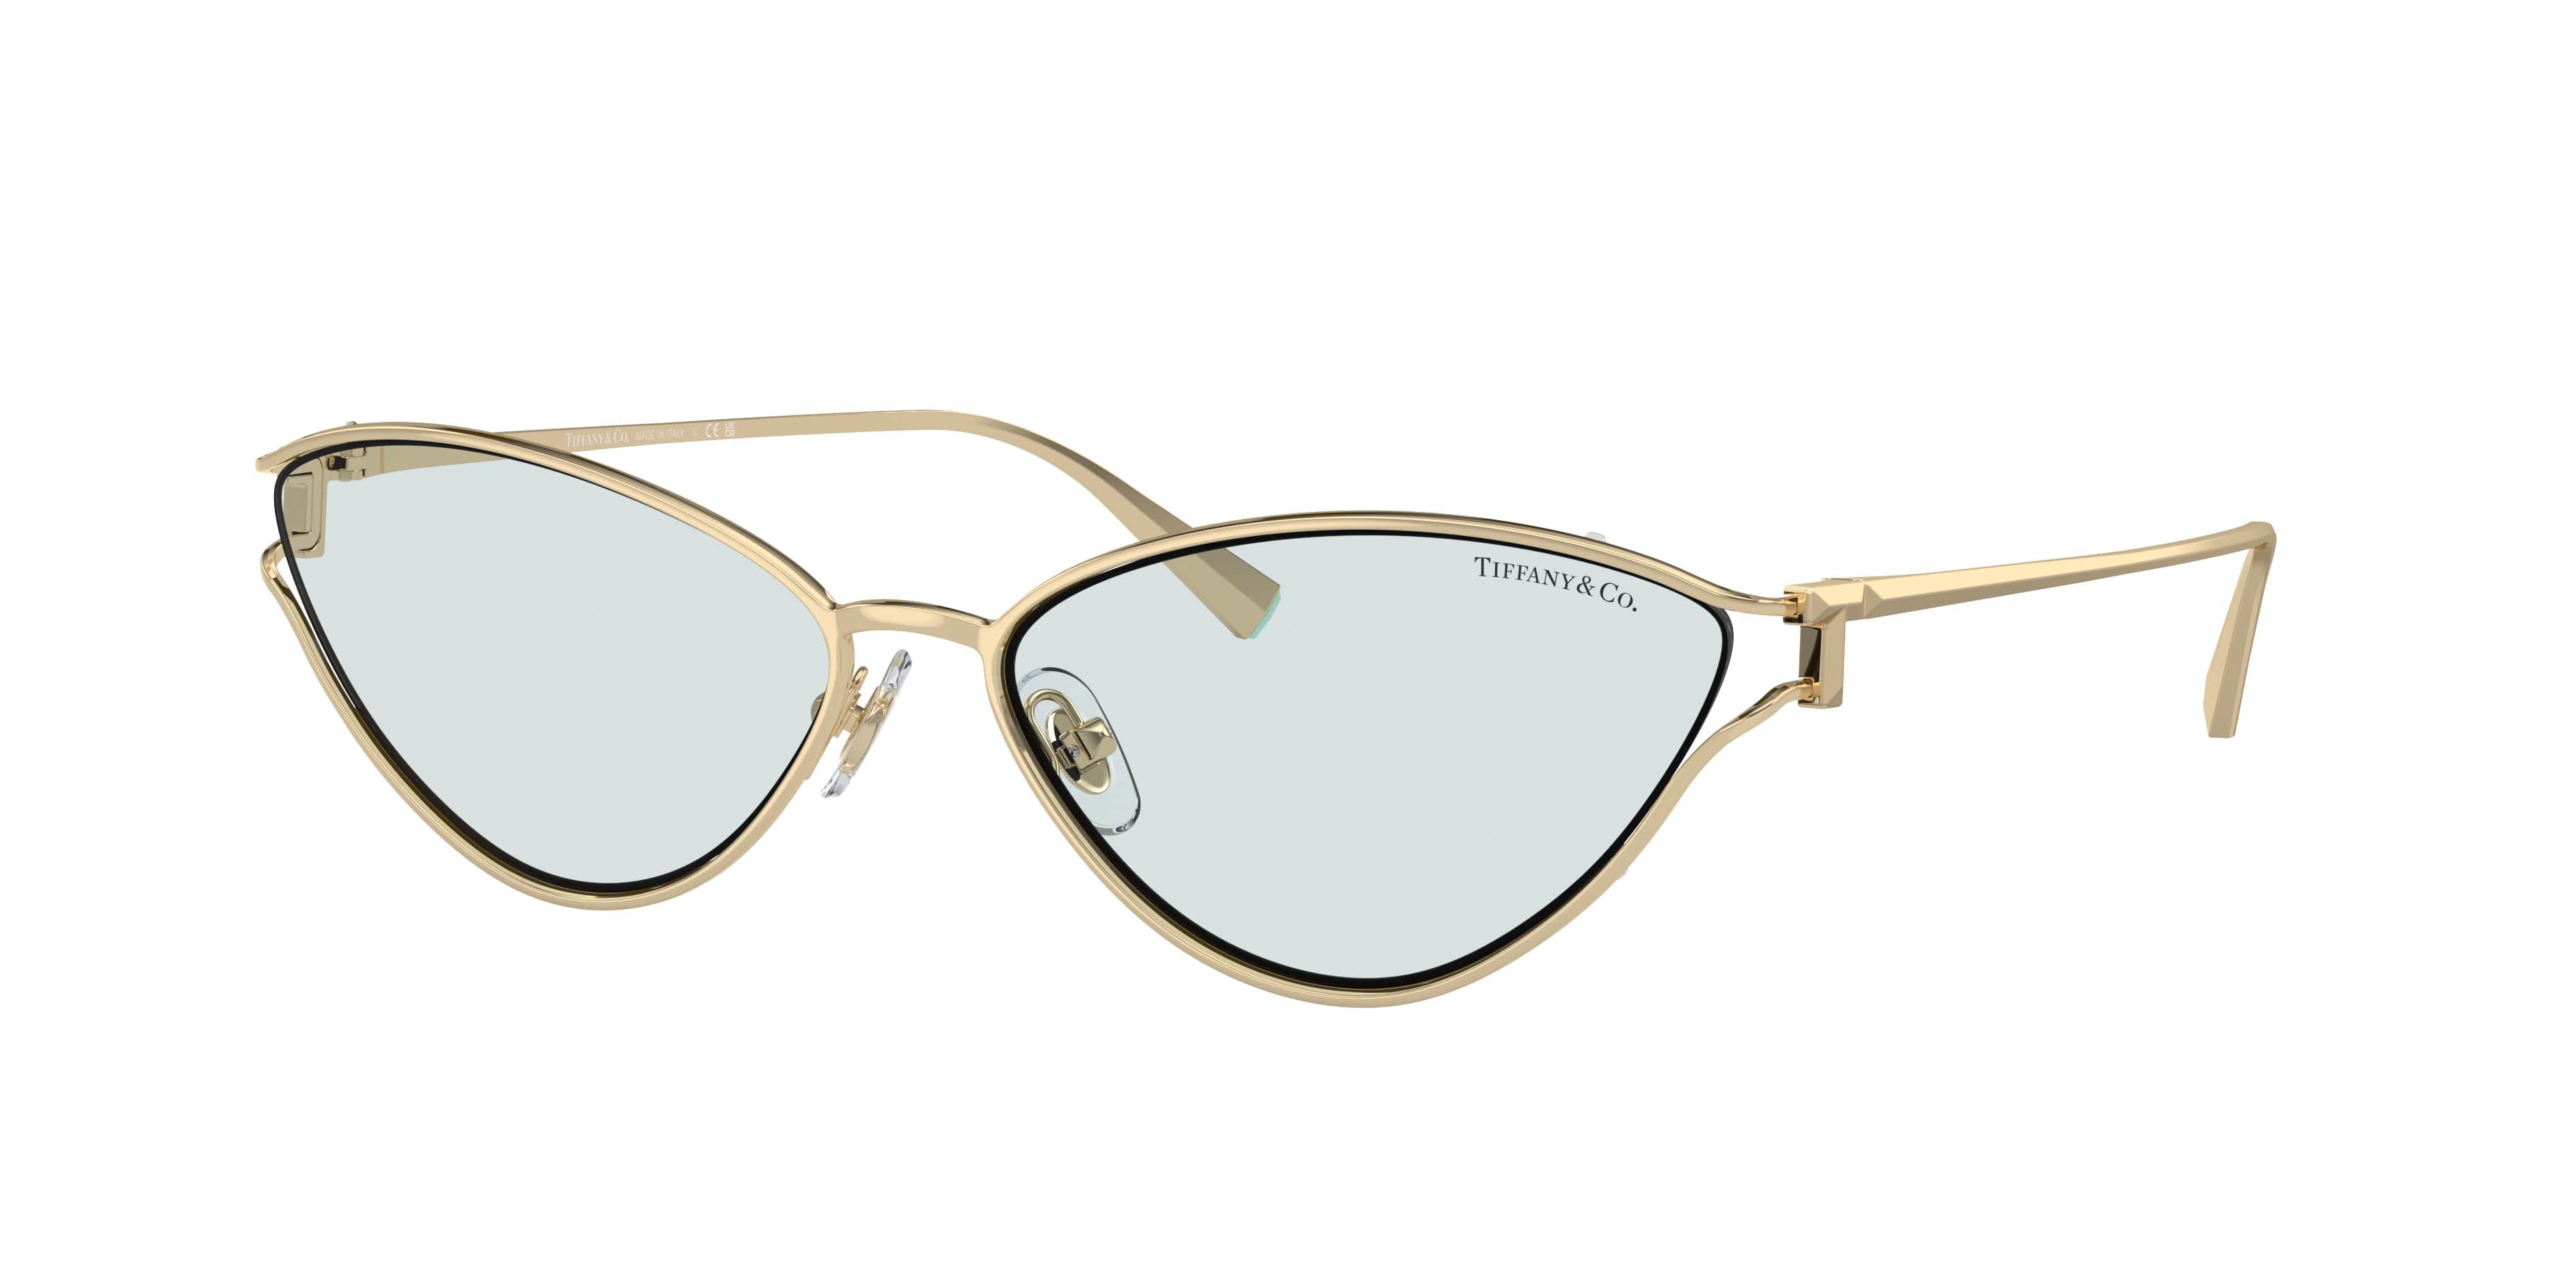 Tiffany Aria sunglasses with blue frames | Tiffany & co., Sunglasses, Sunglass  hut